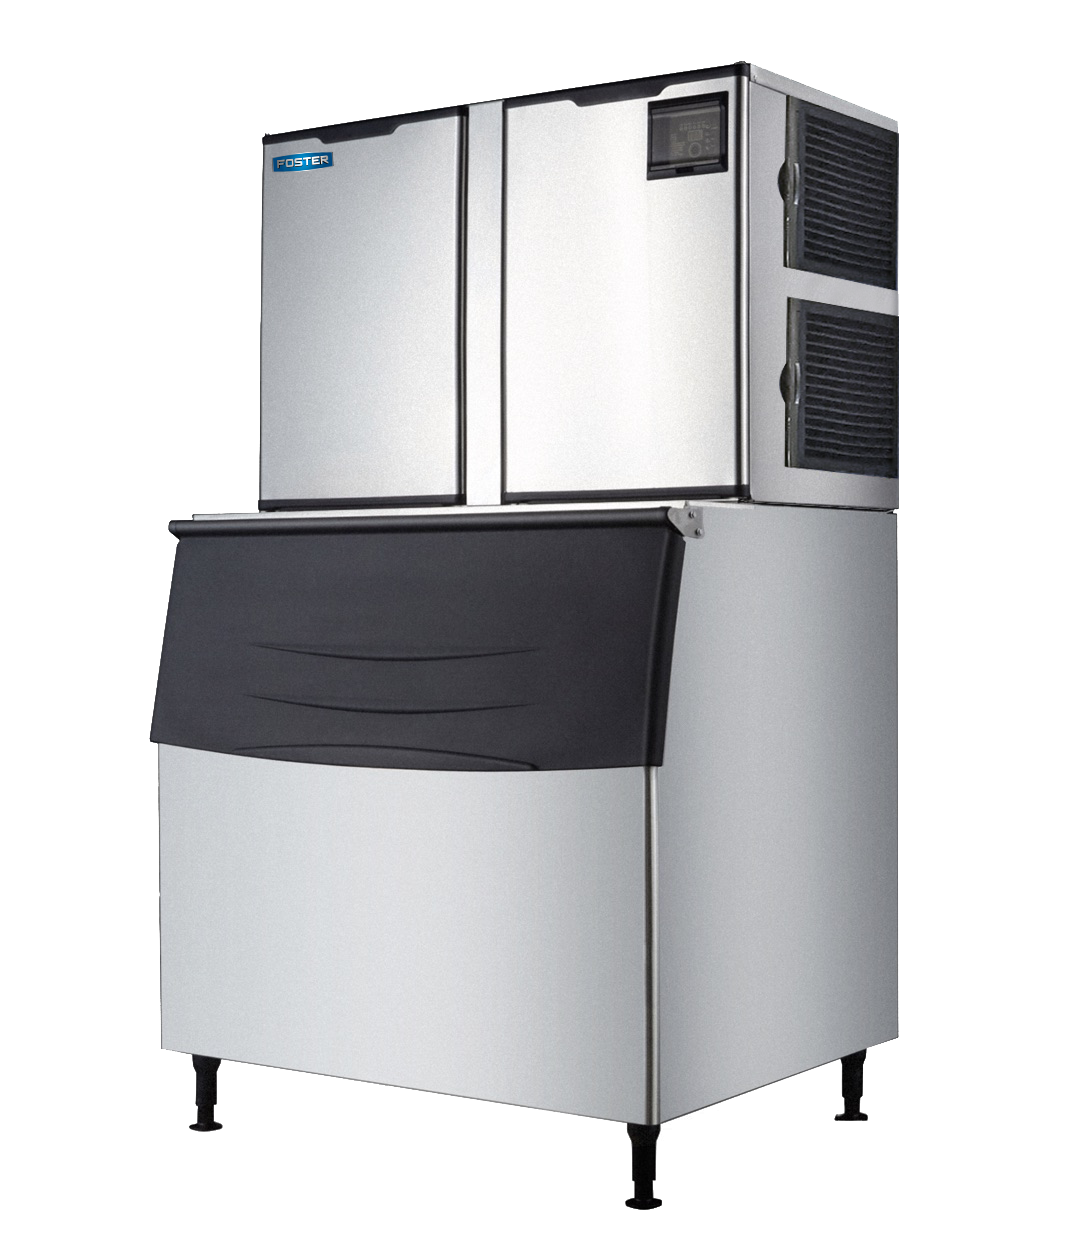 Foster Ice 1500 Lbs. Water-Cooled Ice Machine (Model FIM-1500-WF) with 775 Lbs. Bin (B-775)